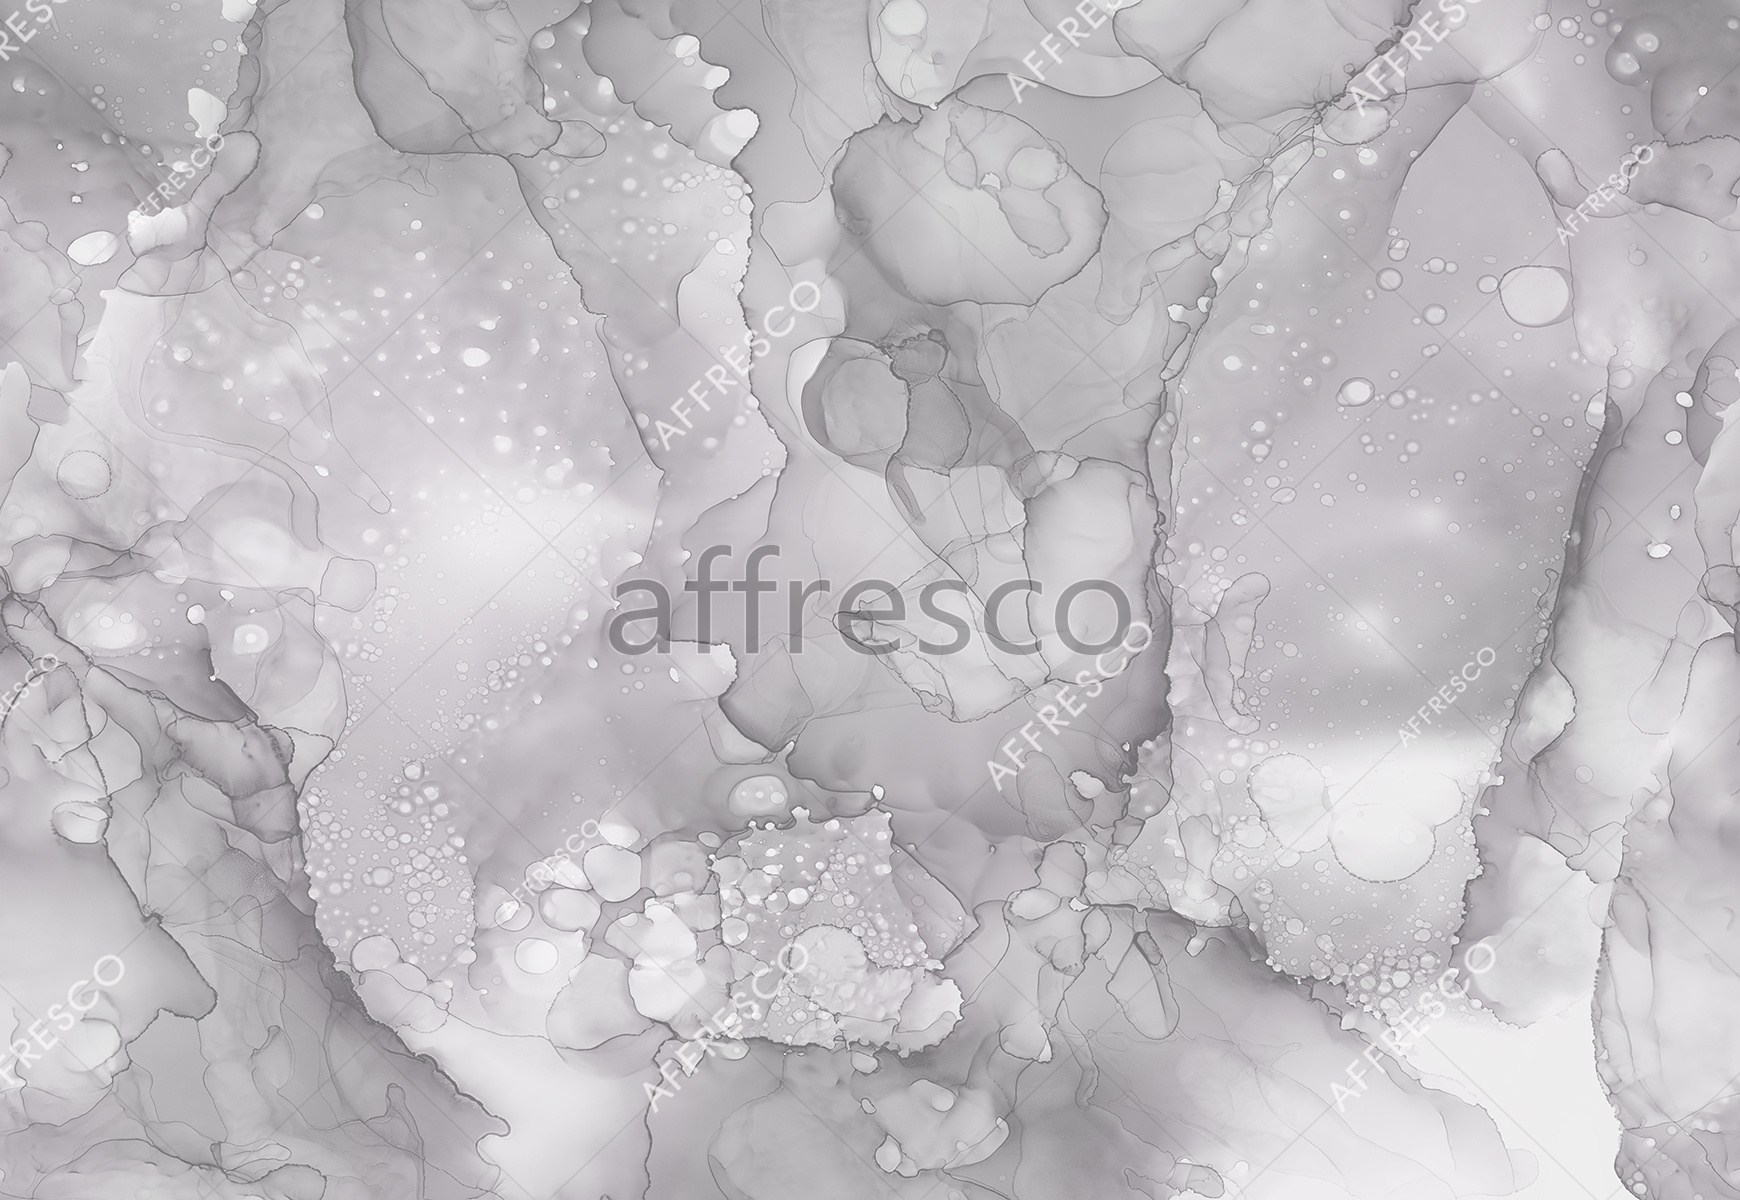 ID138795 | Textures |  | Affresco Factory